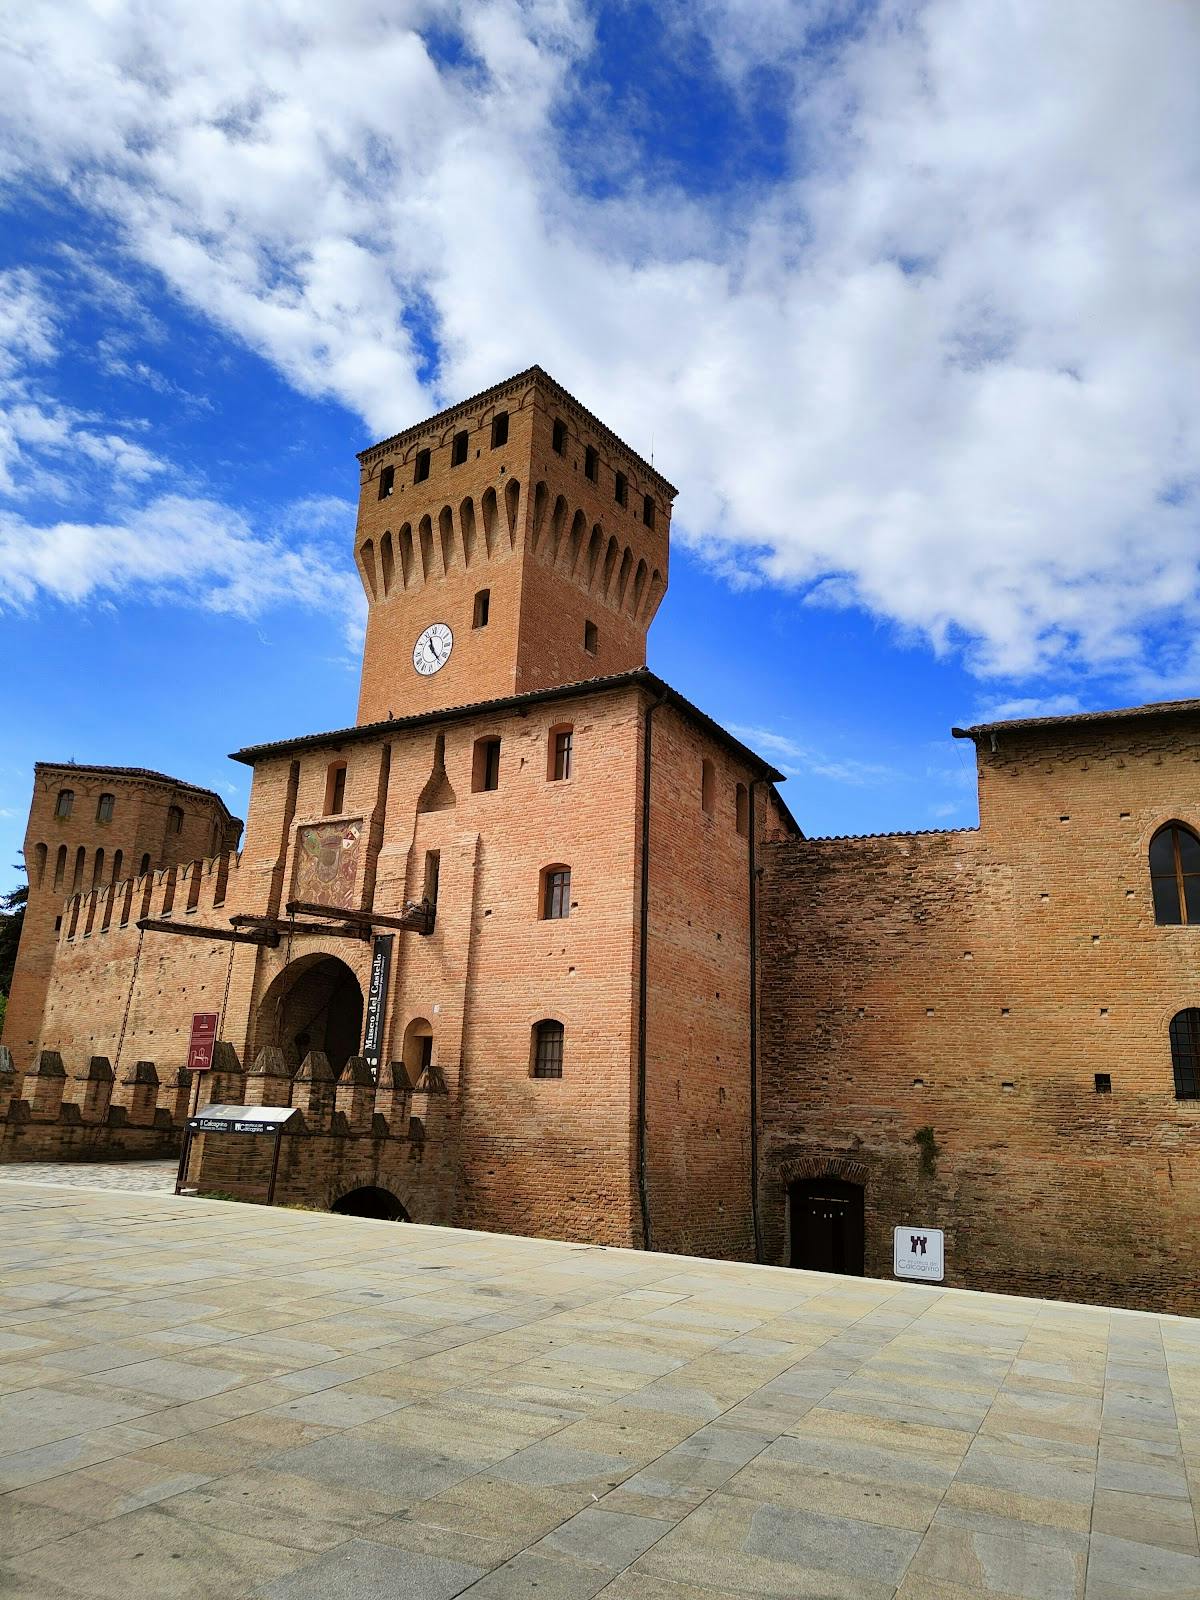 Image - Castello di Formigine